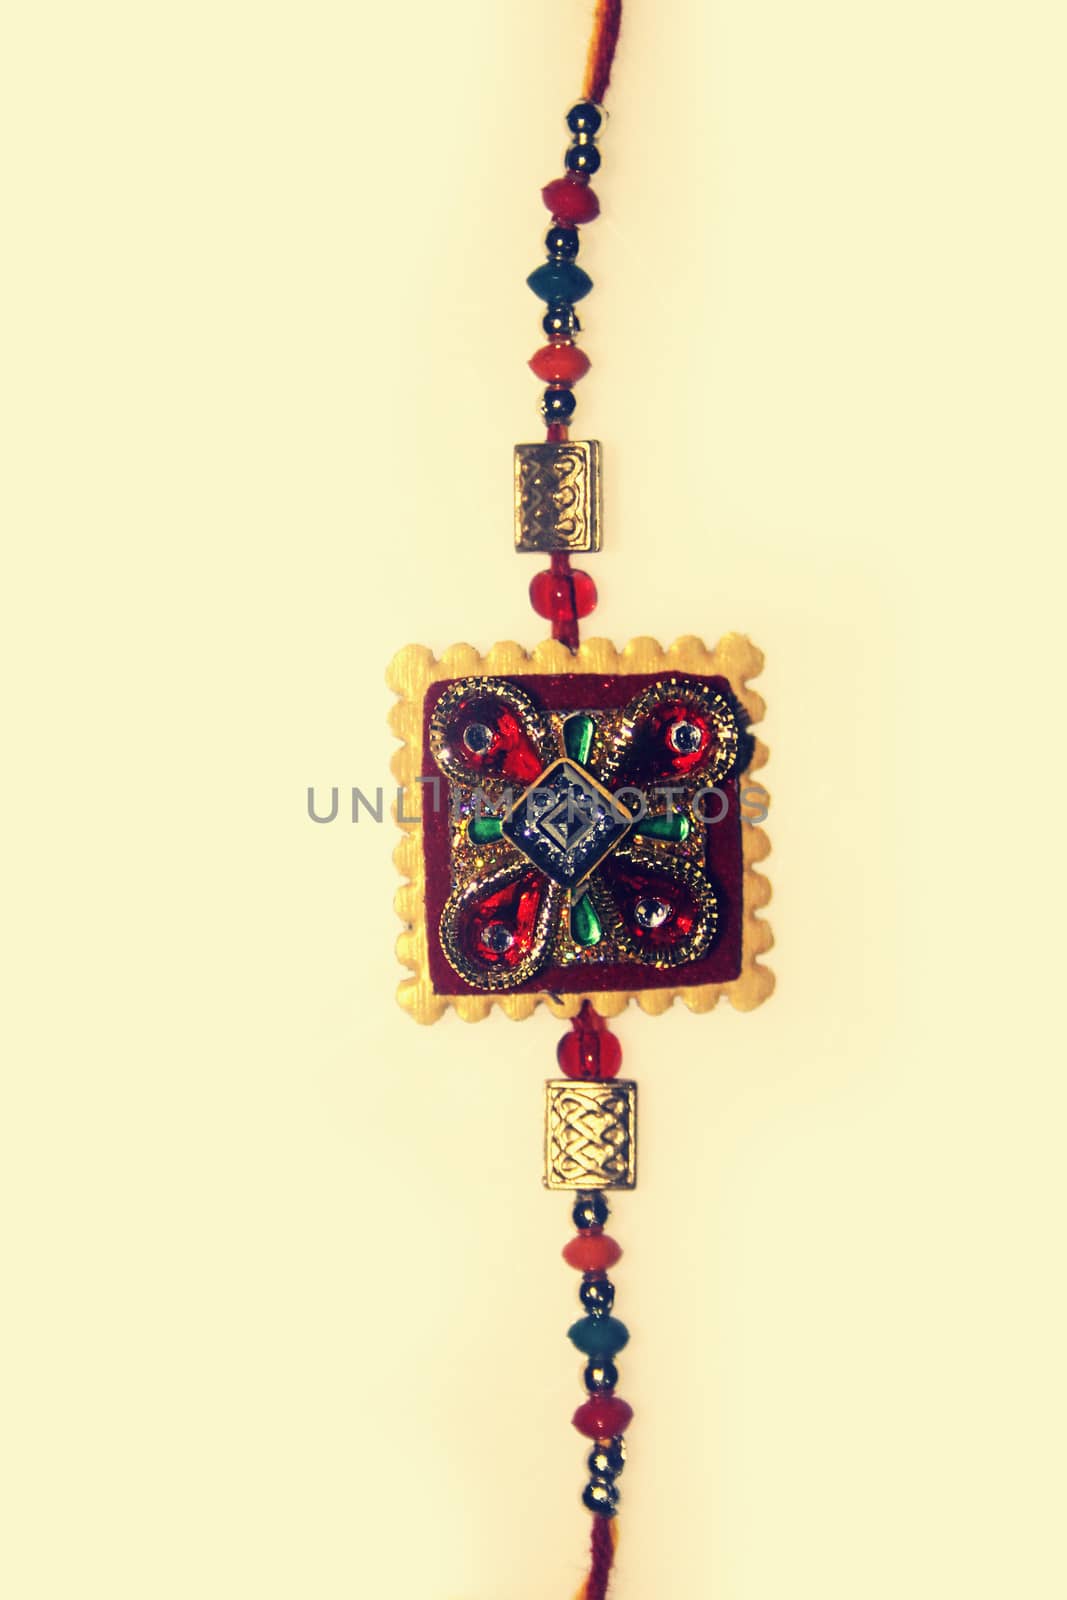 RAKHI, traditional wrist band represents love bonding between Si by yands